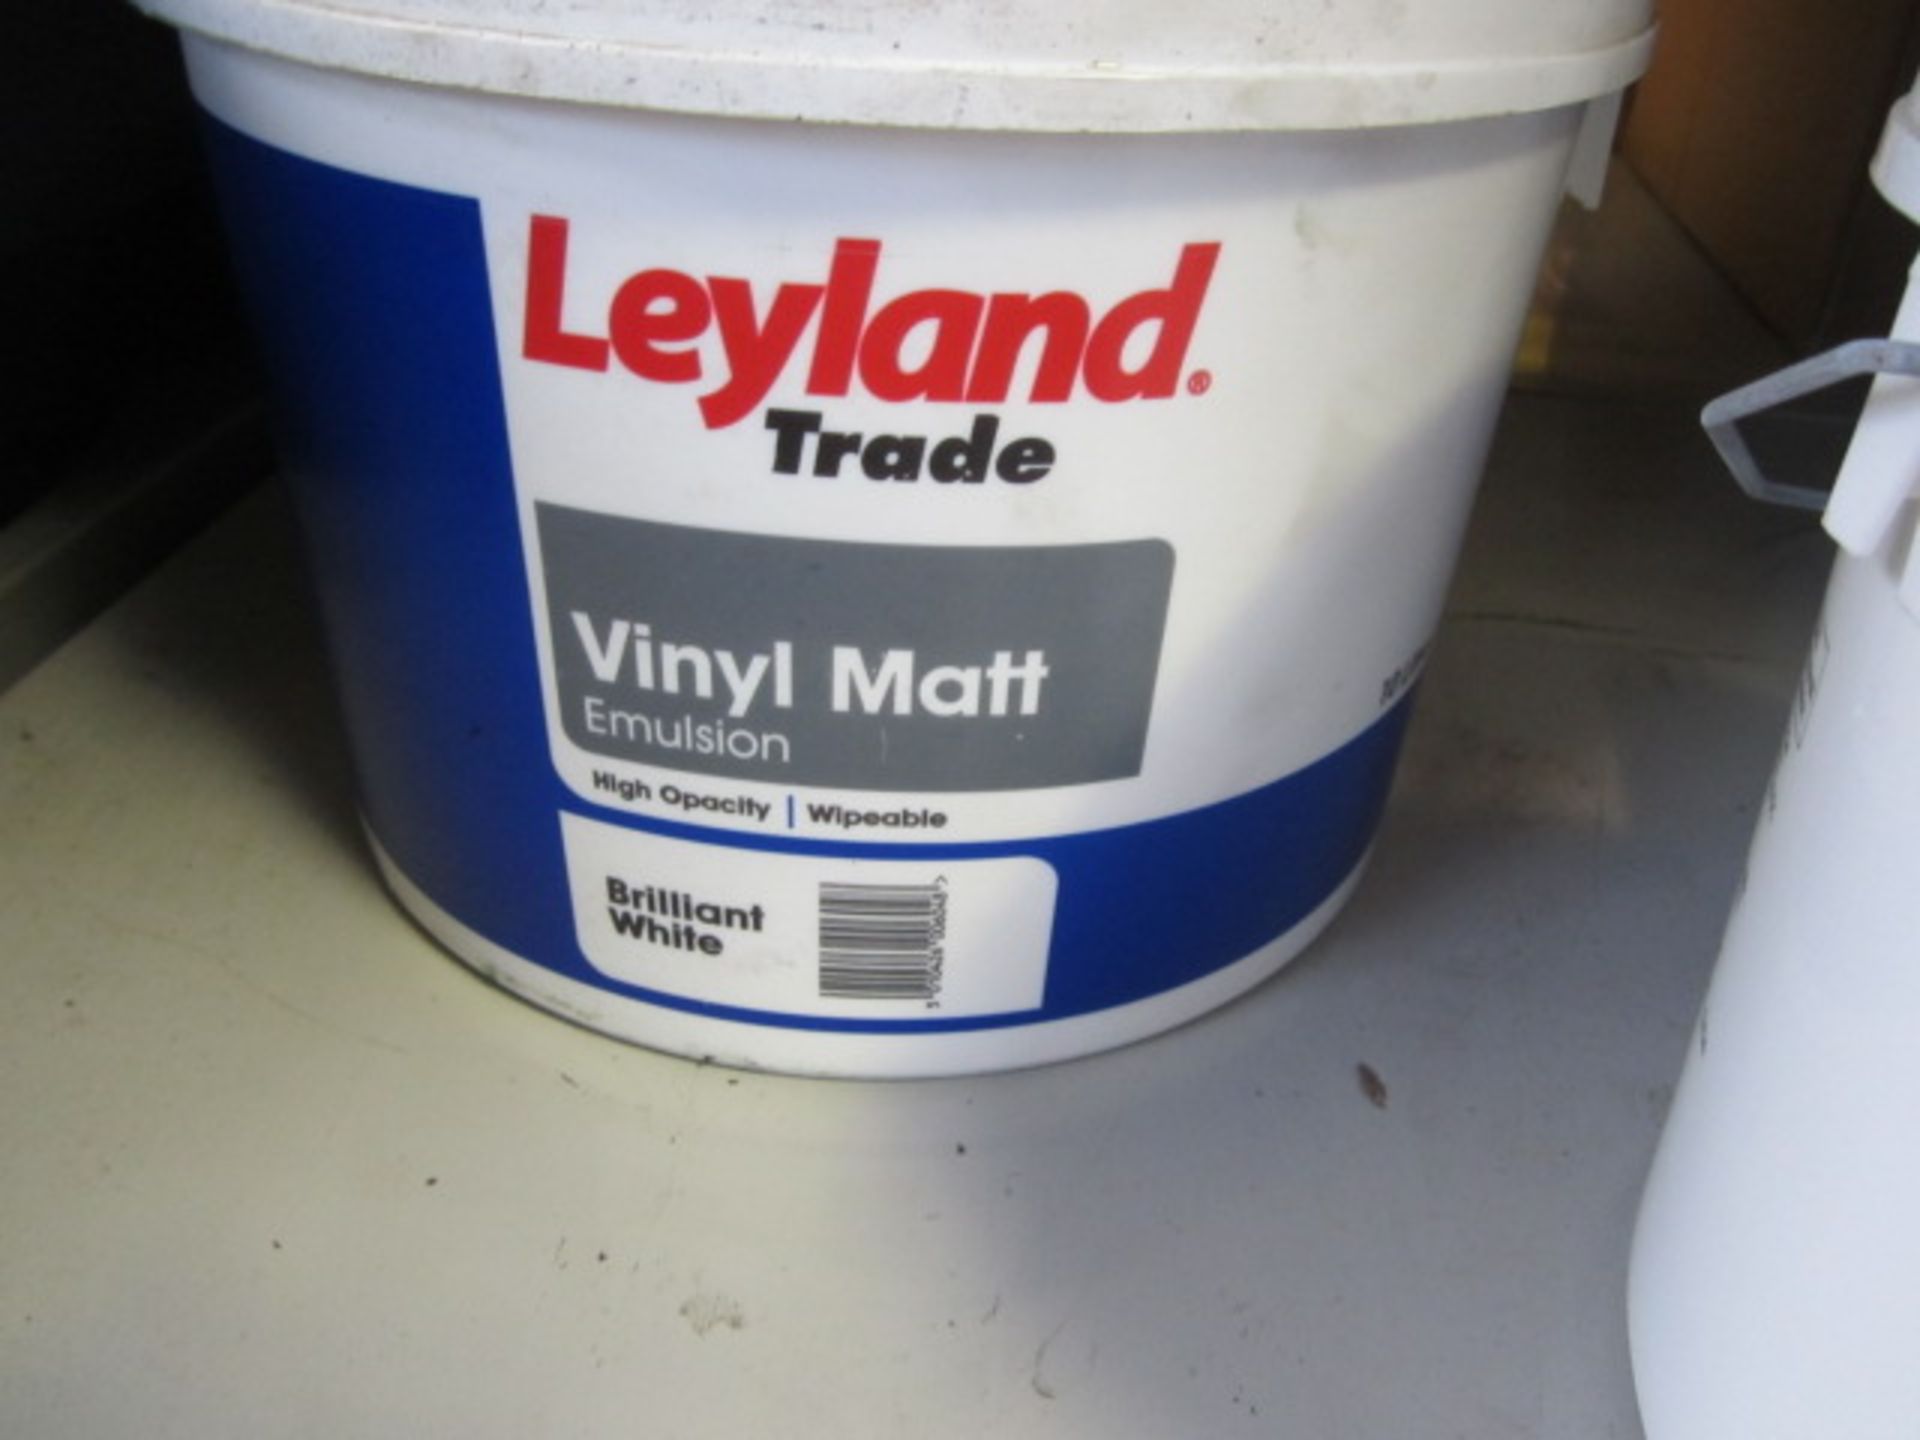 Five tubs Leyland vinyl matt emulsion, brilliant white 10 litres - Image 2 of 2